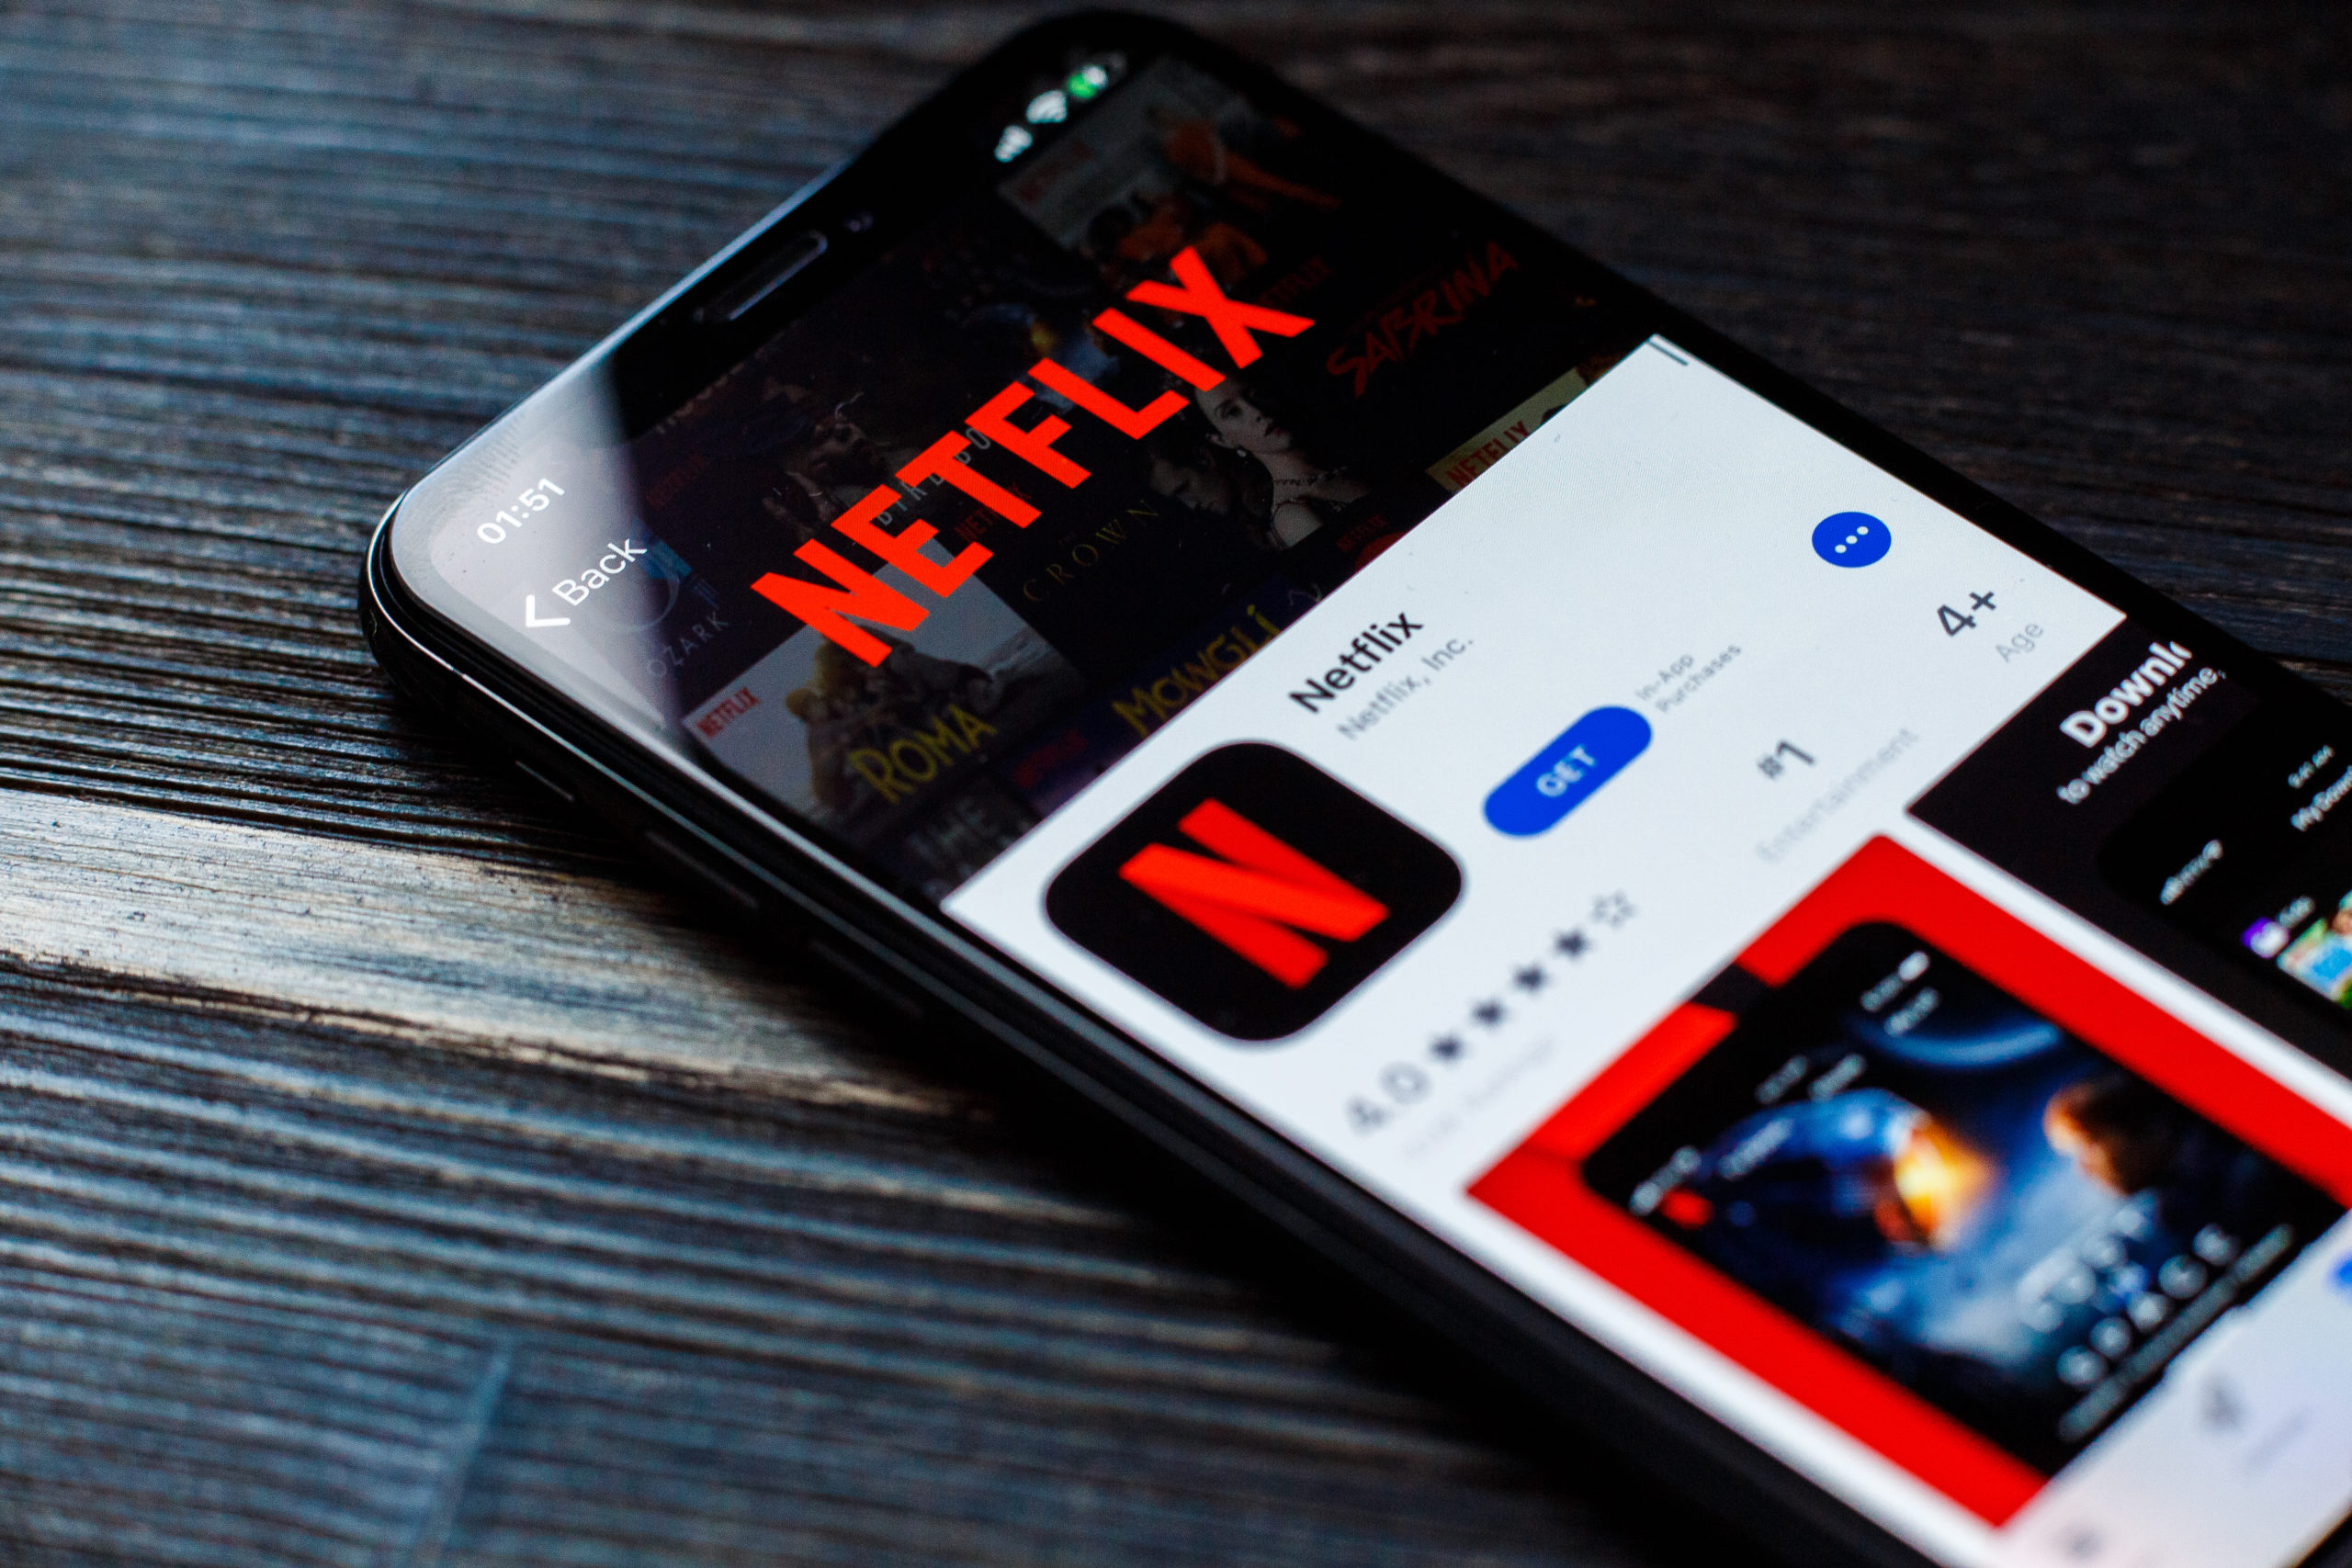 Netflix lidera em taxa de cancelamentos no Brasil; confira ranking